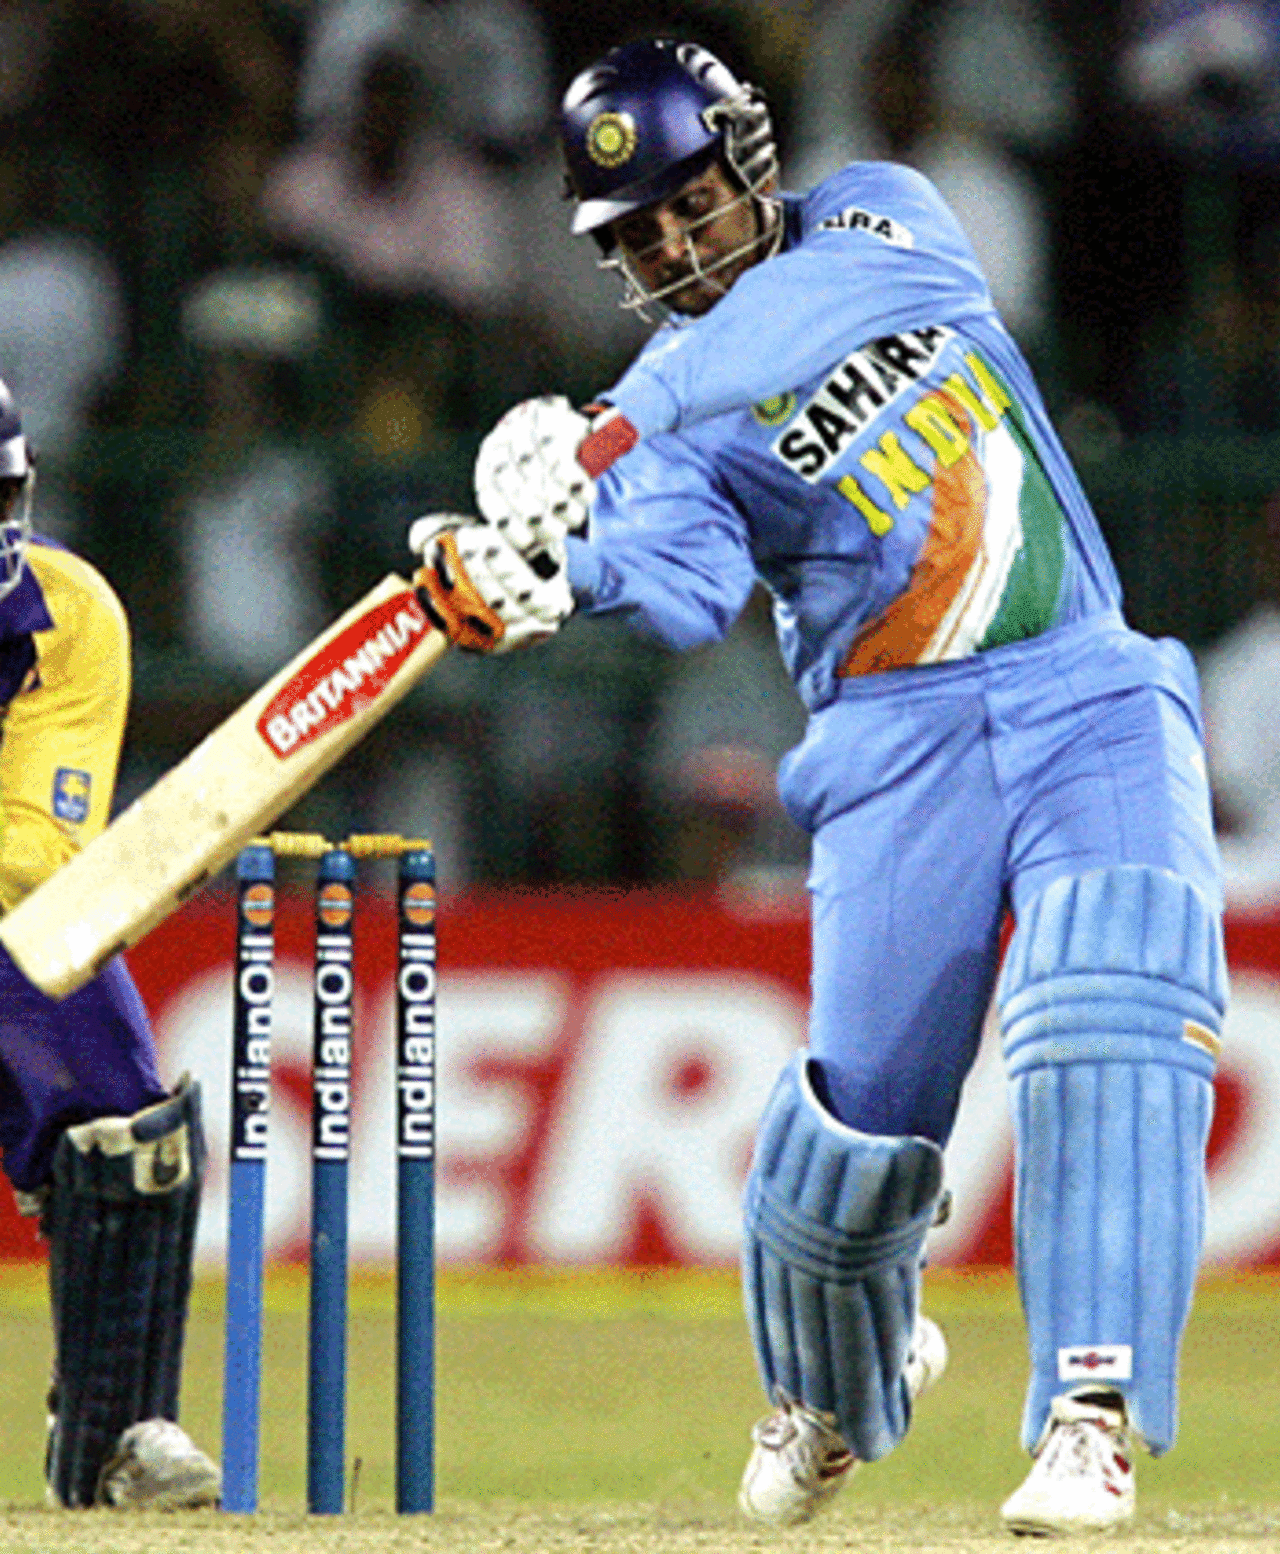 Virender Sehwag blasts one through cover, India v Sri Lanka, Premadasa Stadium, August 9, 2005